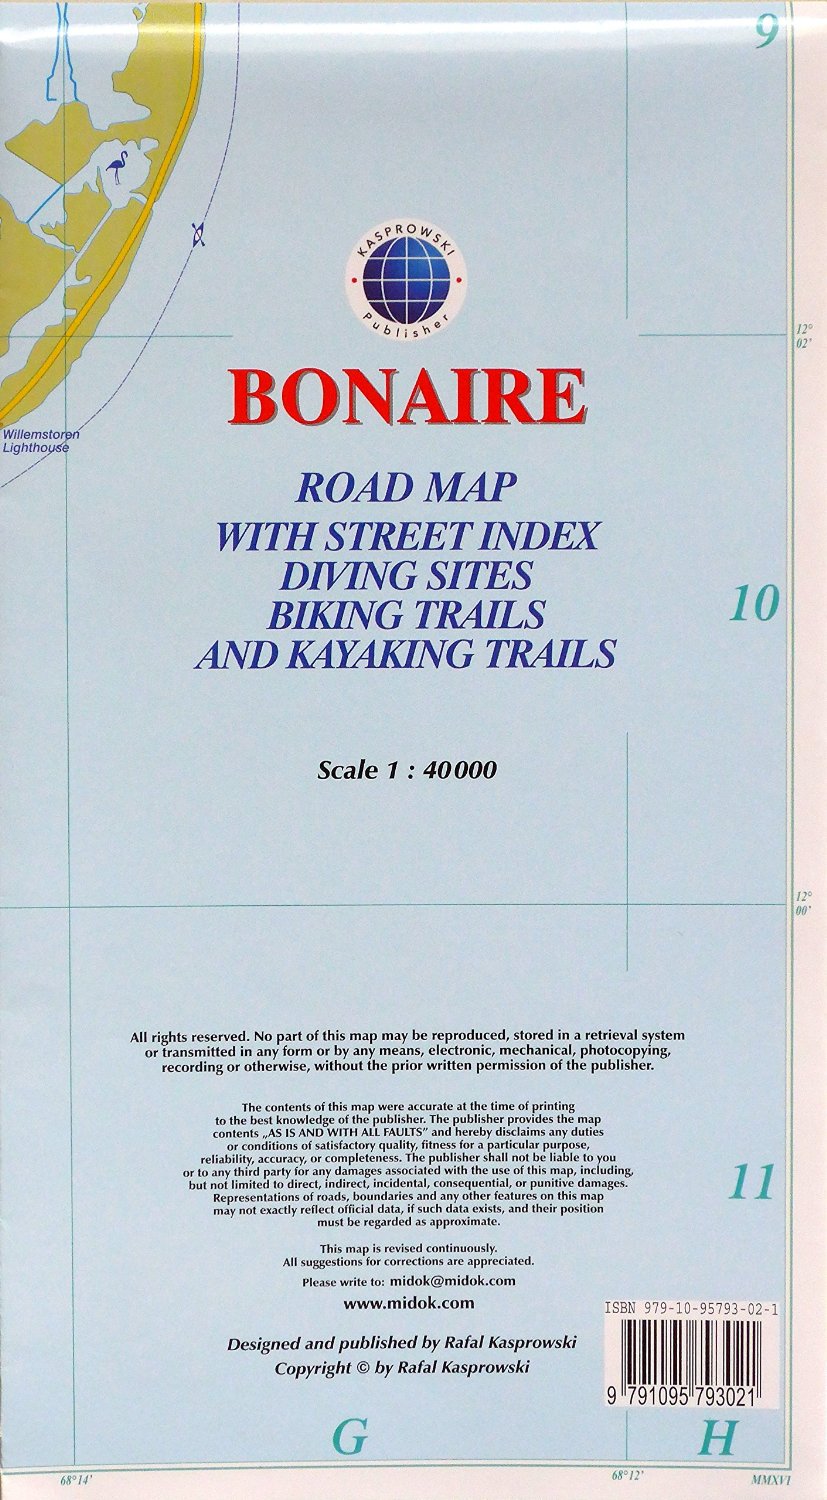 Bonaire Road Map - Kasprowski Publisher